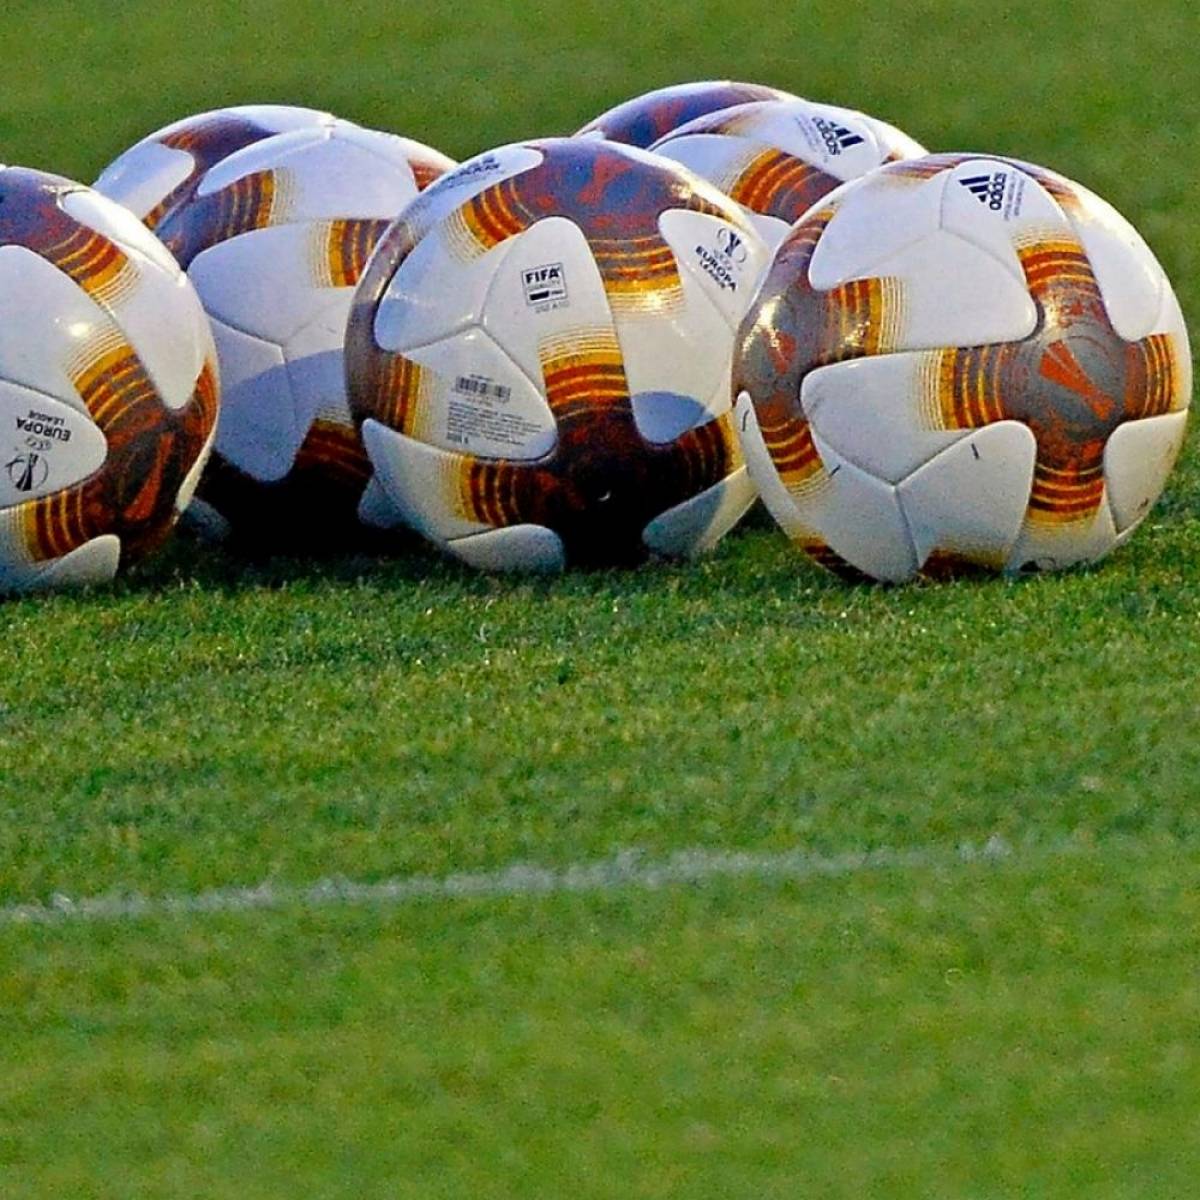 Nike Pitch Strike ballon d'entraînement Premier League ballon de football  Bundes